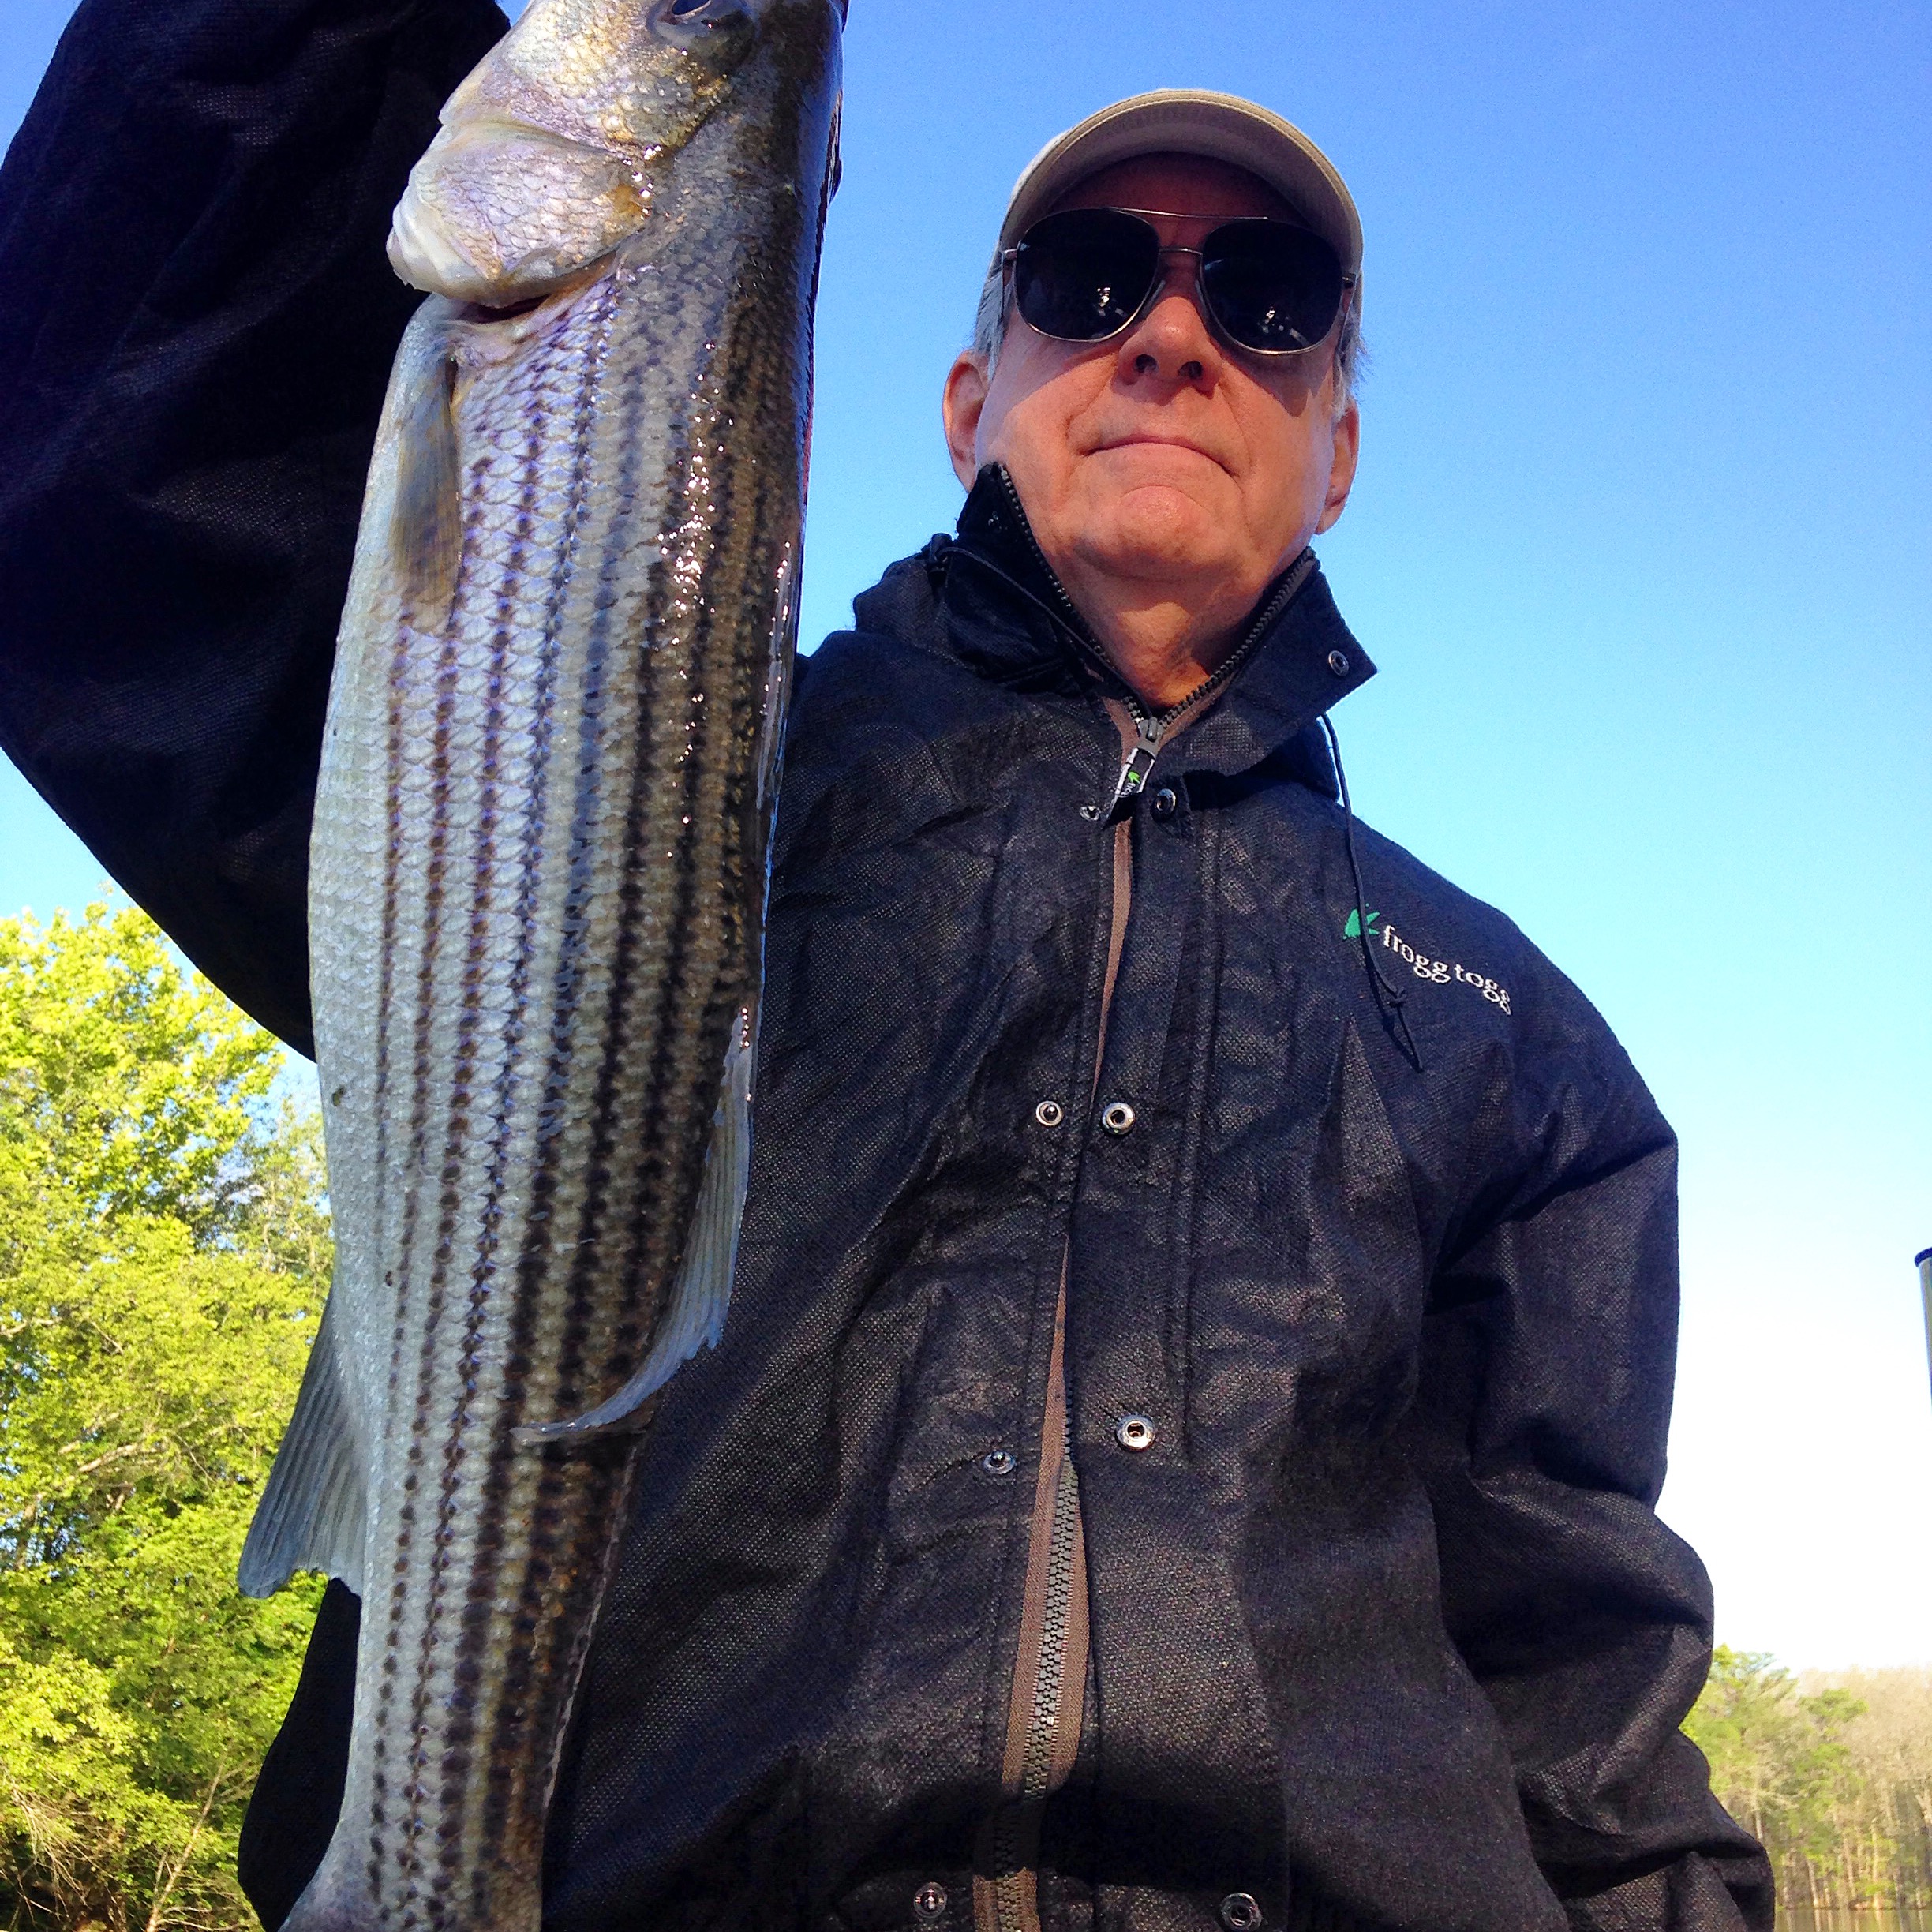 Roanoke River Striped Bass Eastern NC Fishing Guide